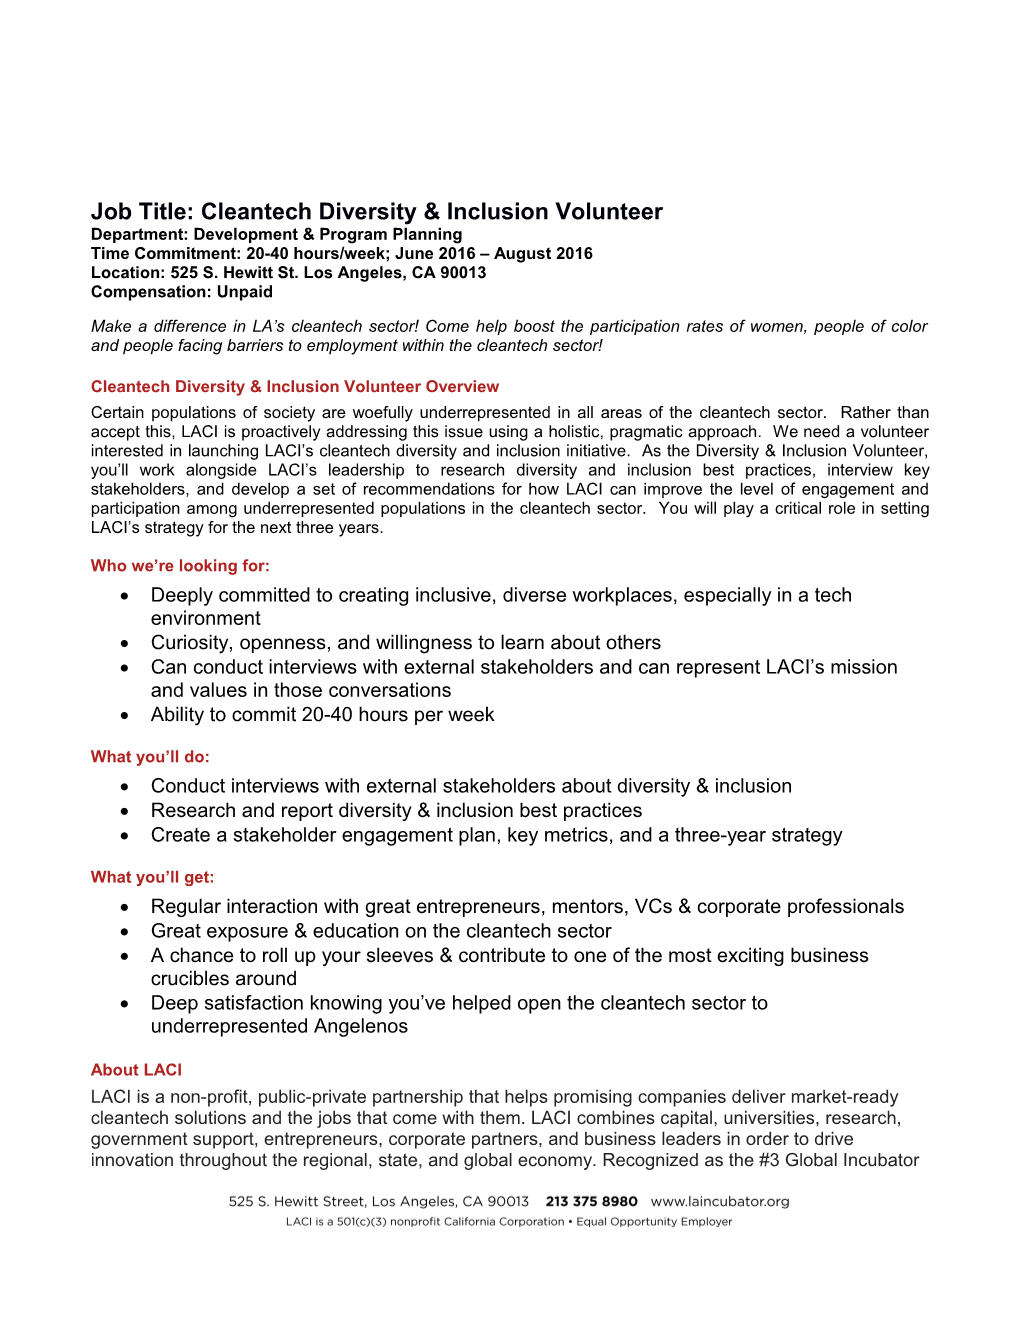 Job Title: Cleantech Diversity & Inclusion Volunteer